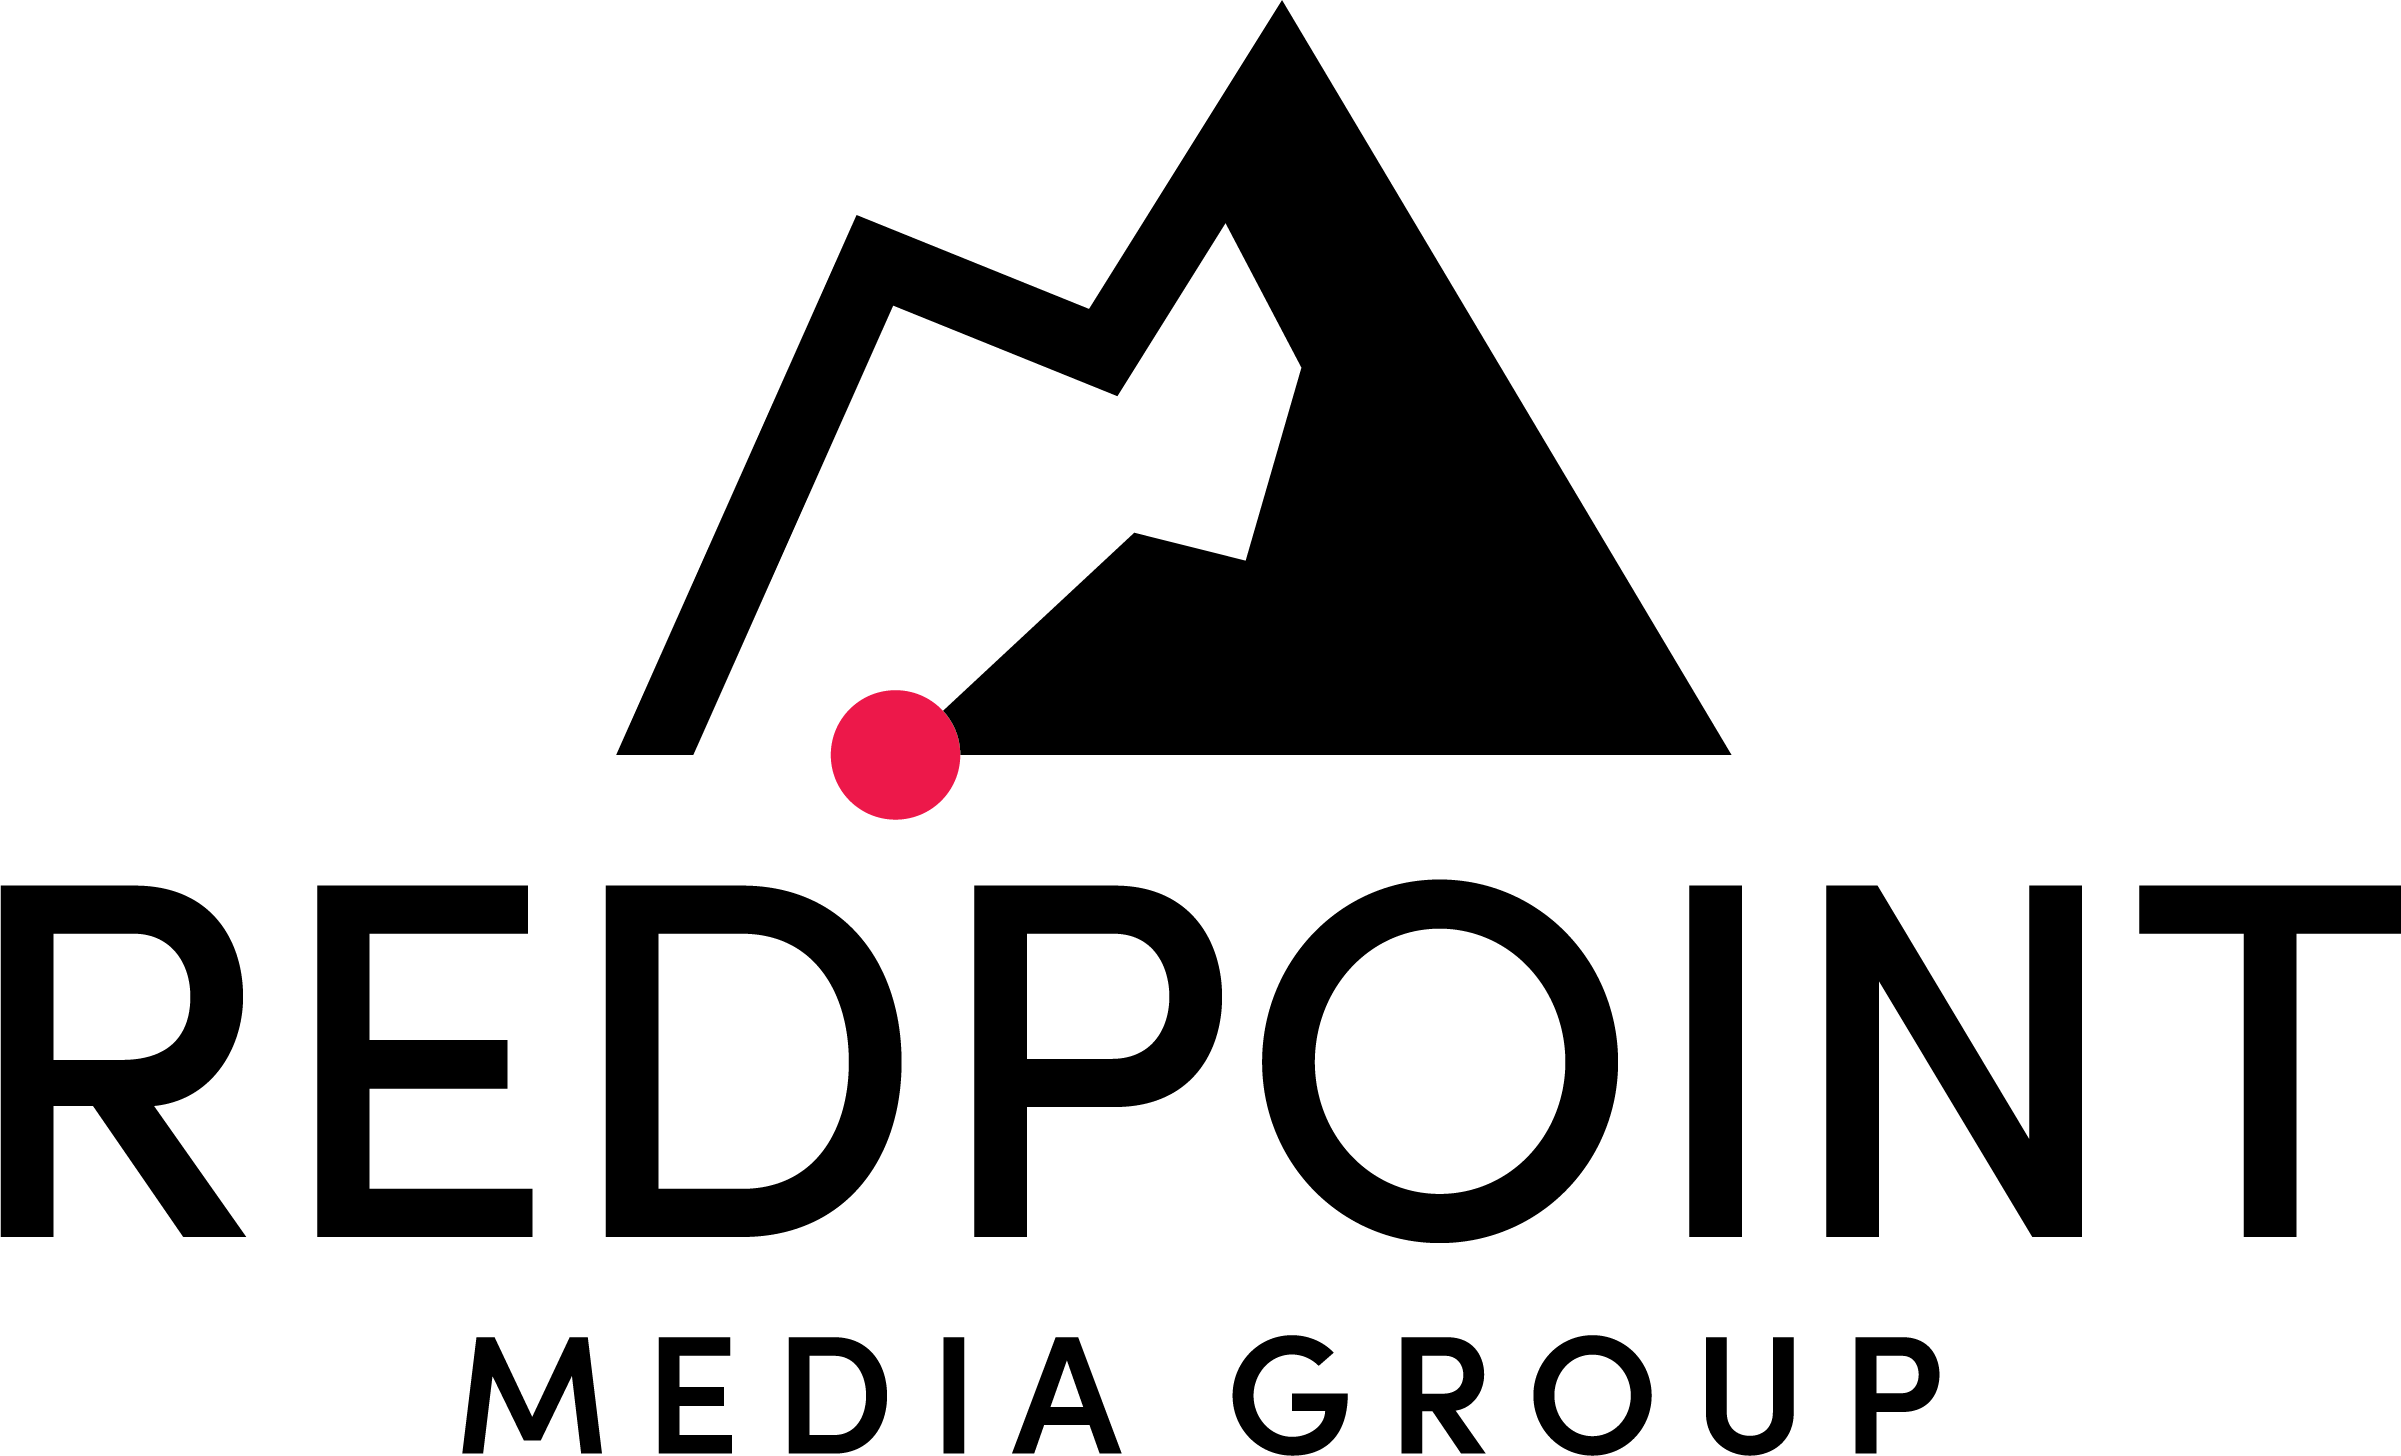 Redpoint Media Group lol